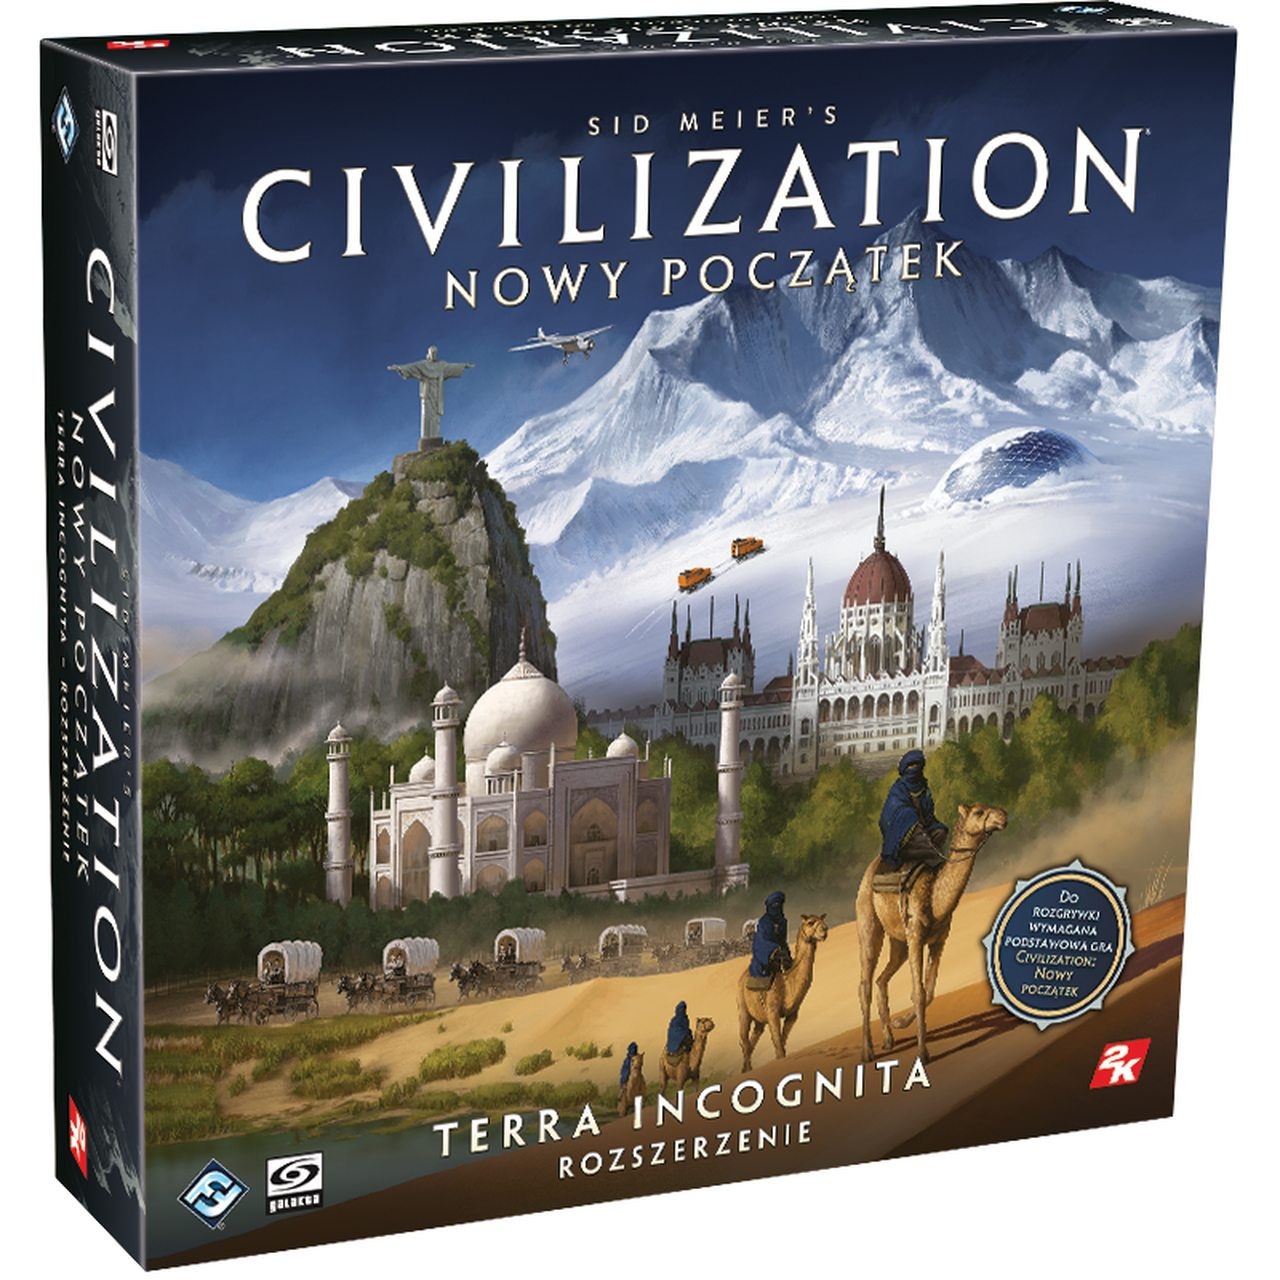 Civilization: Nowy początek – Terra Incognita